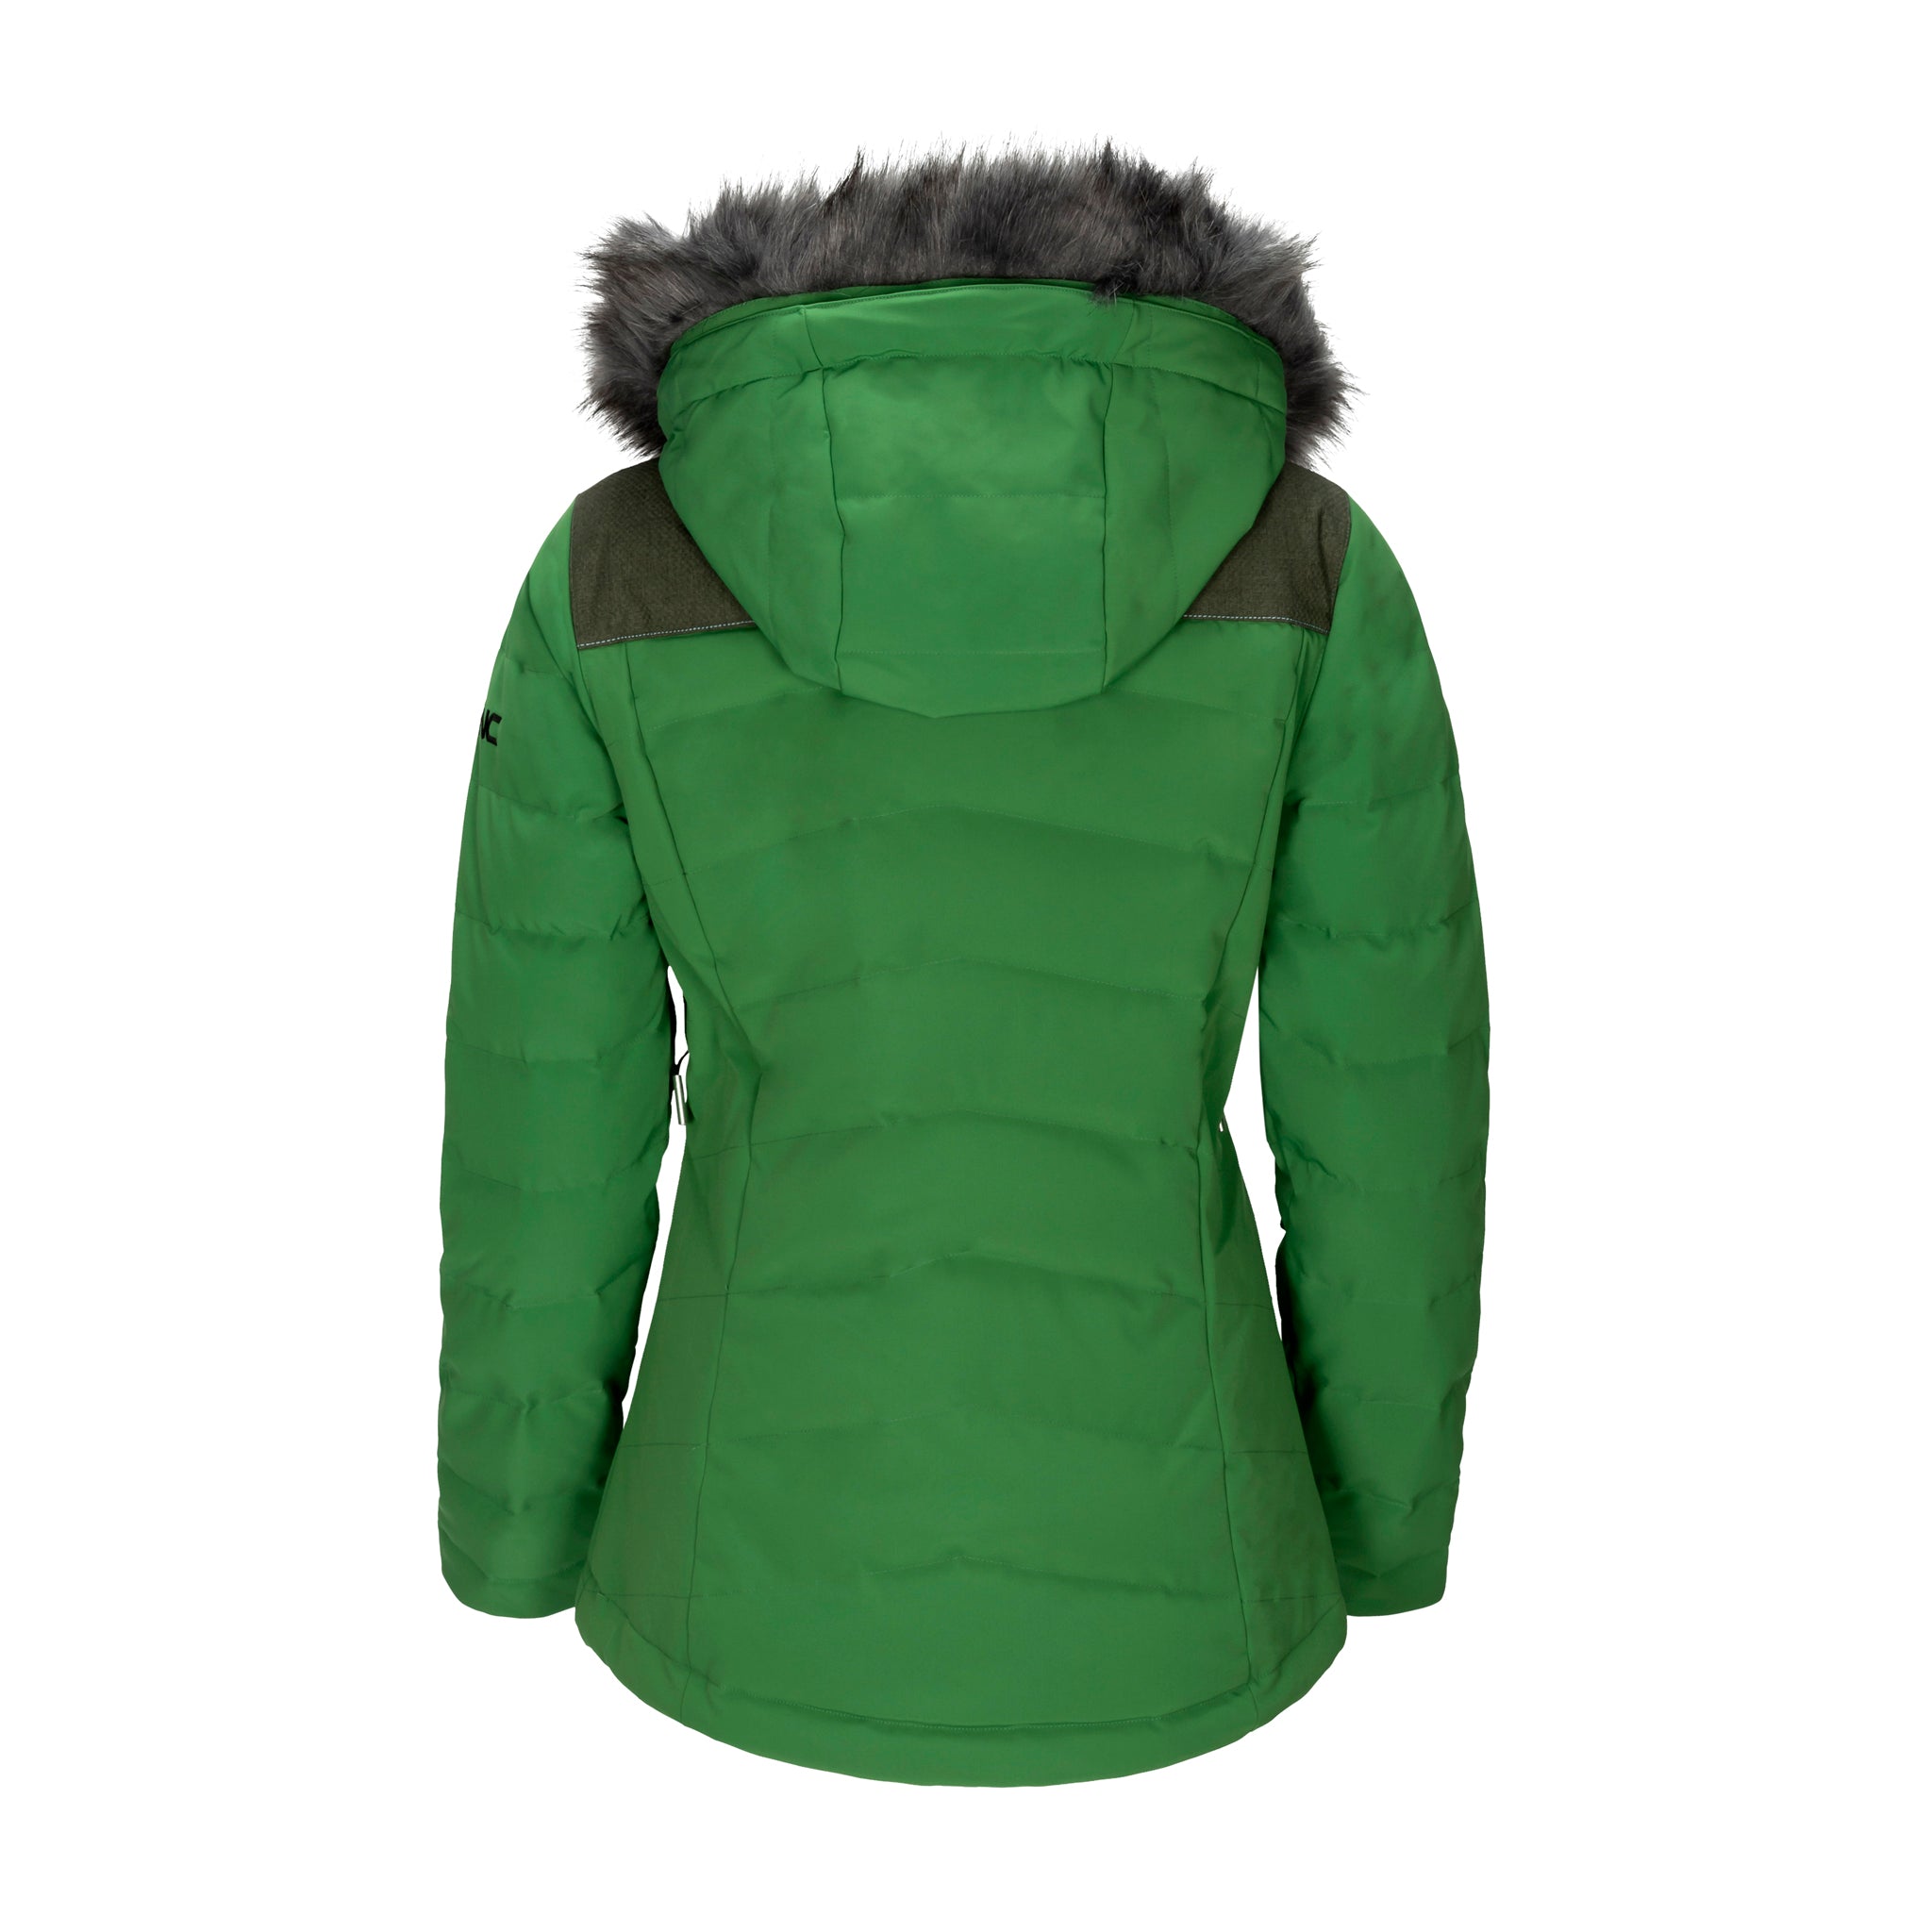 Women's Shelter Parka, Insulated Ski Jacket